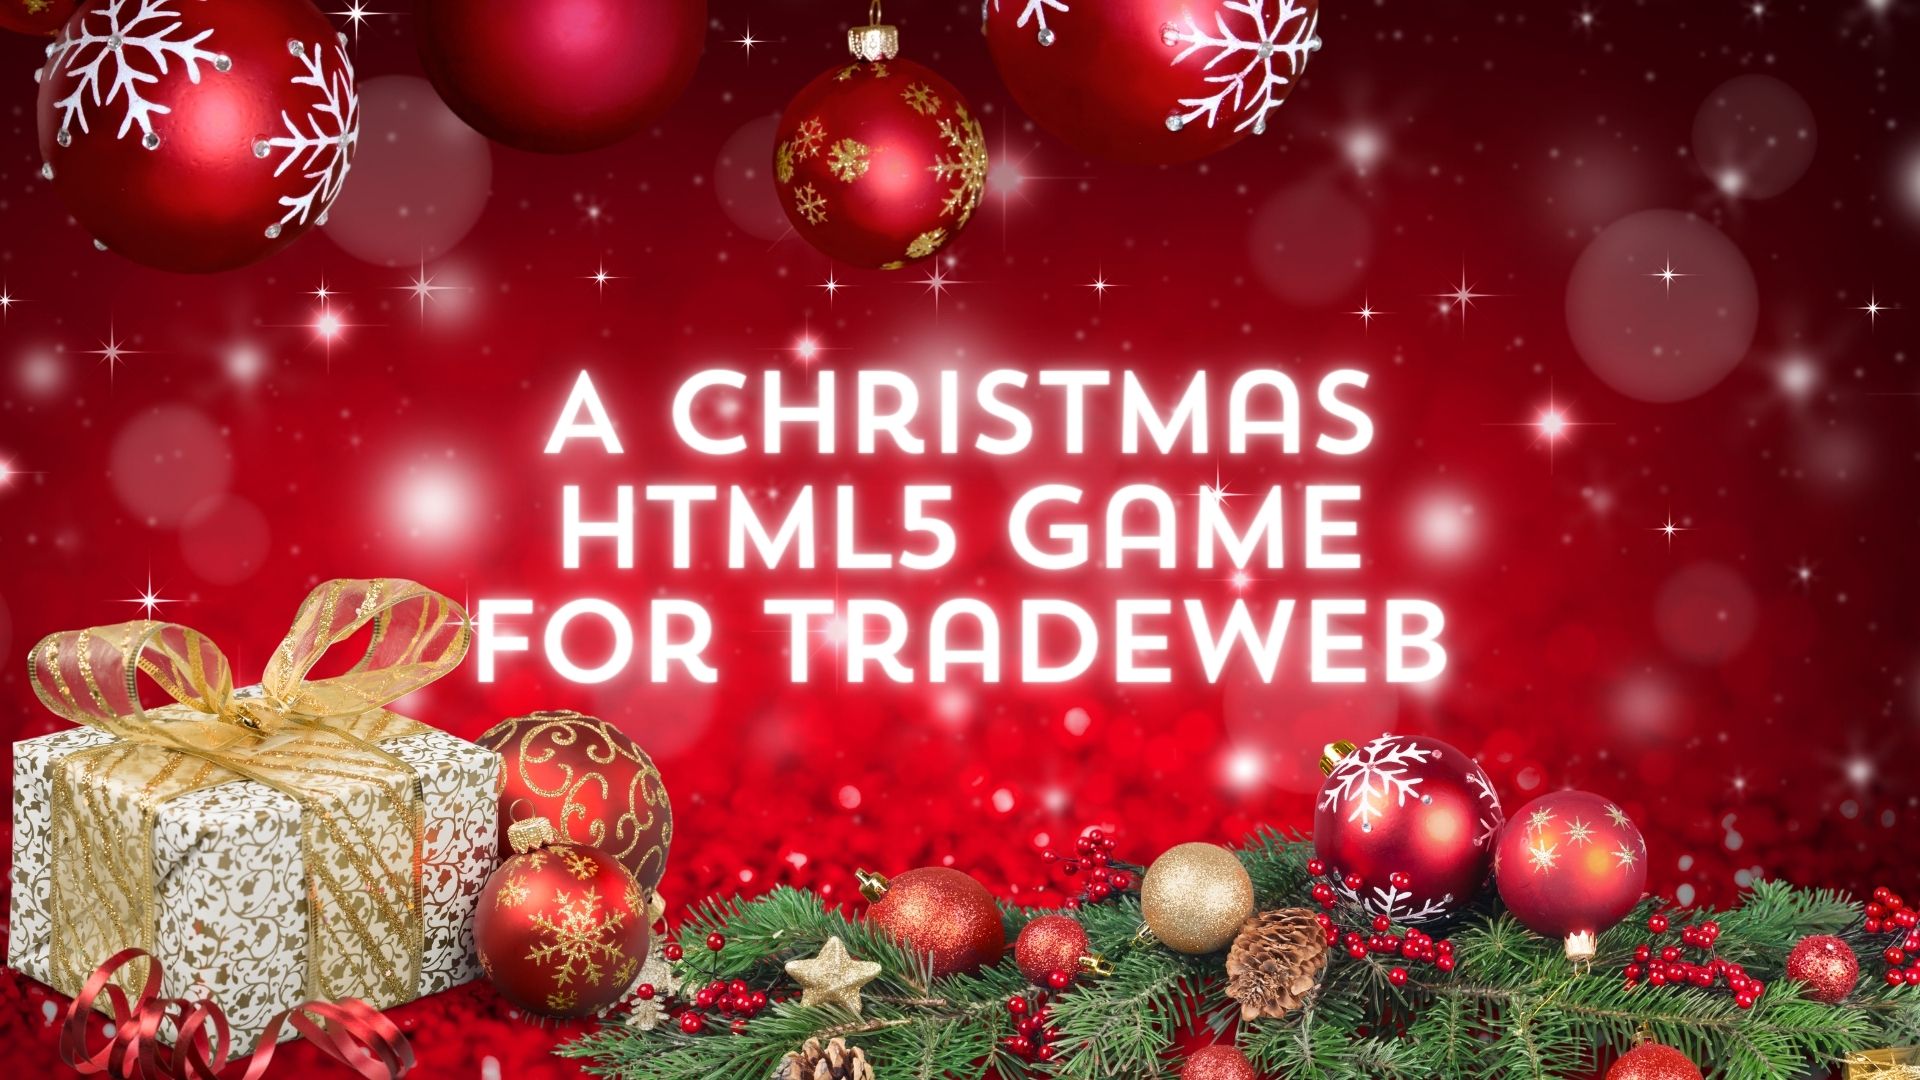 Case Study - A Christmas HTML5 Game for Tradeweb